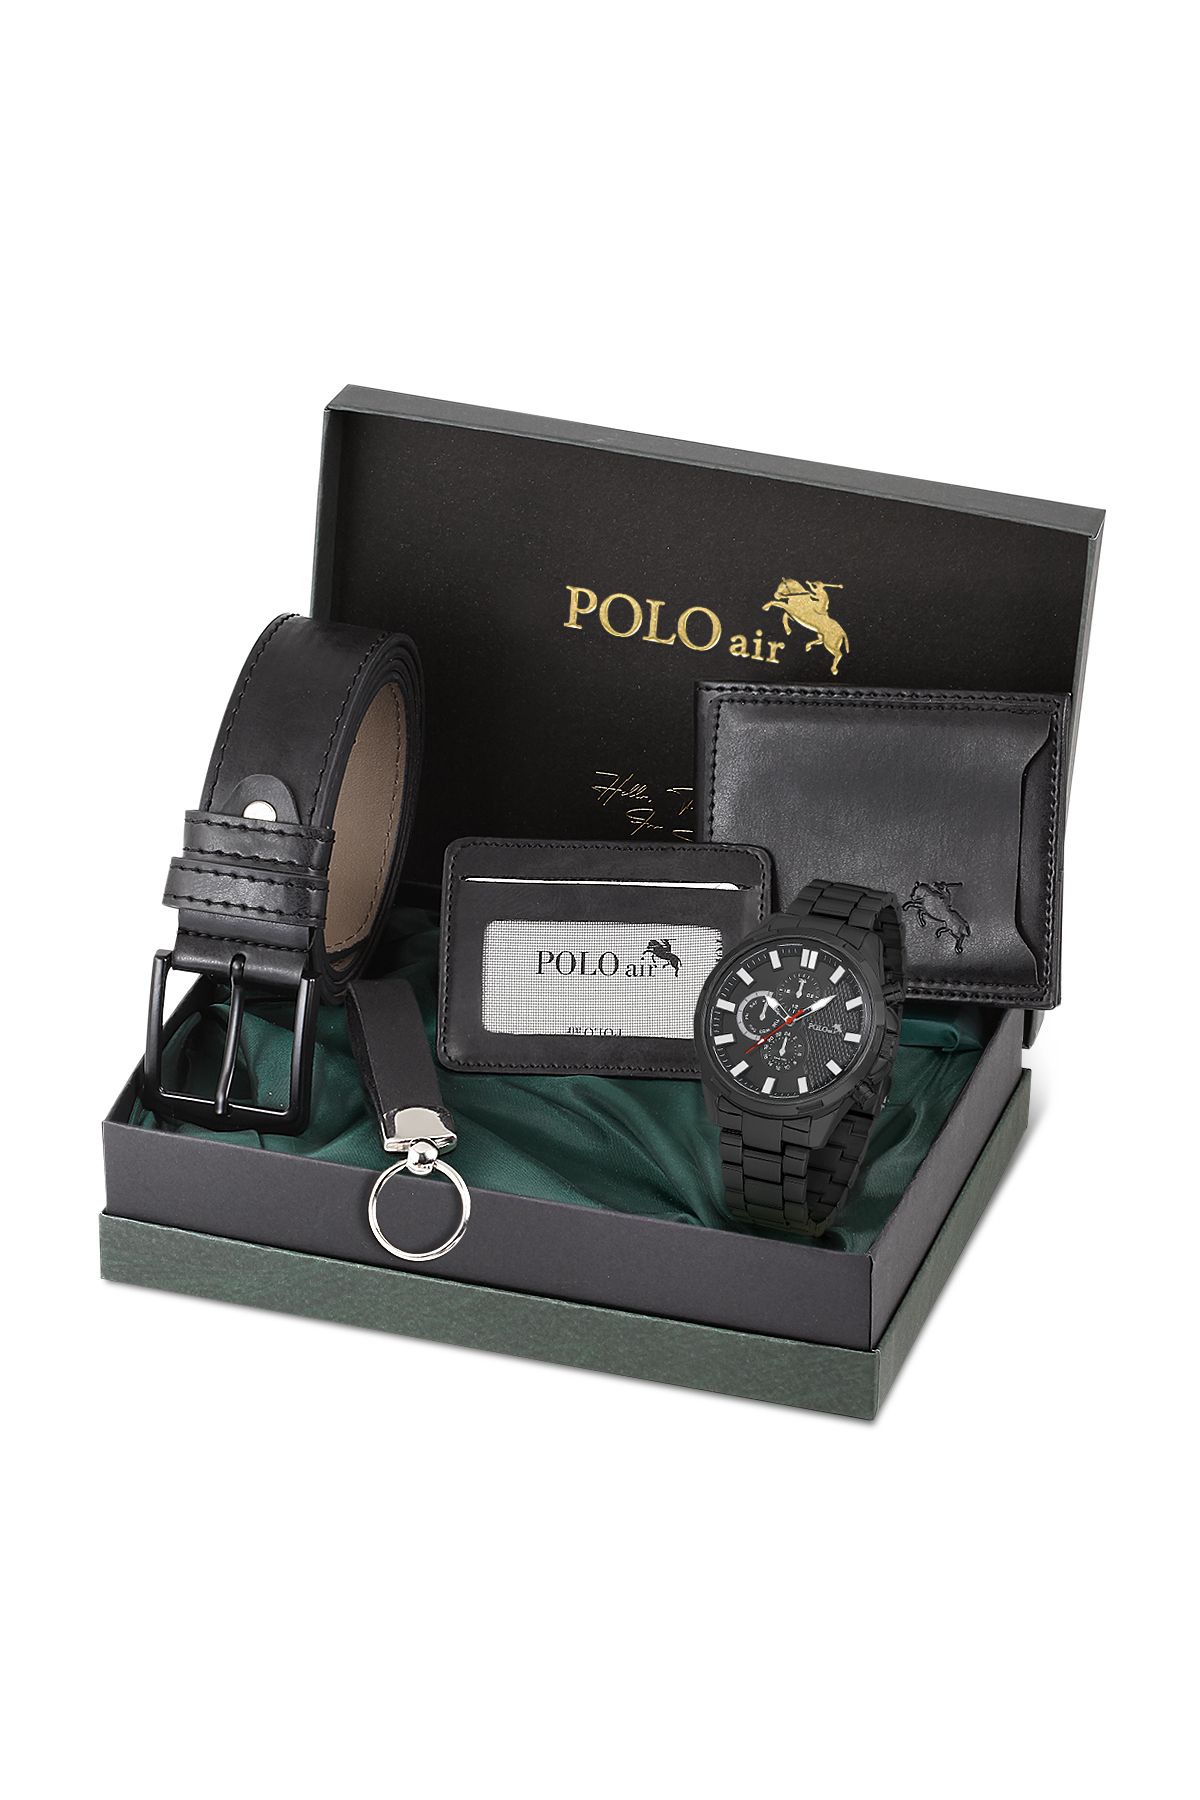 polo air Cüzdan Kartlık Kemer Saat Anahtarlık Set Siyah Renk